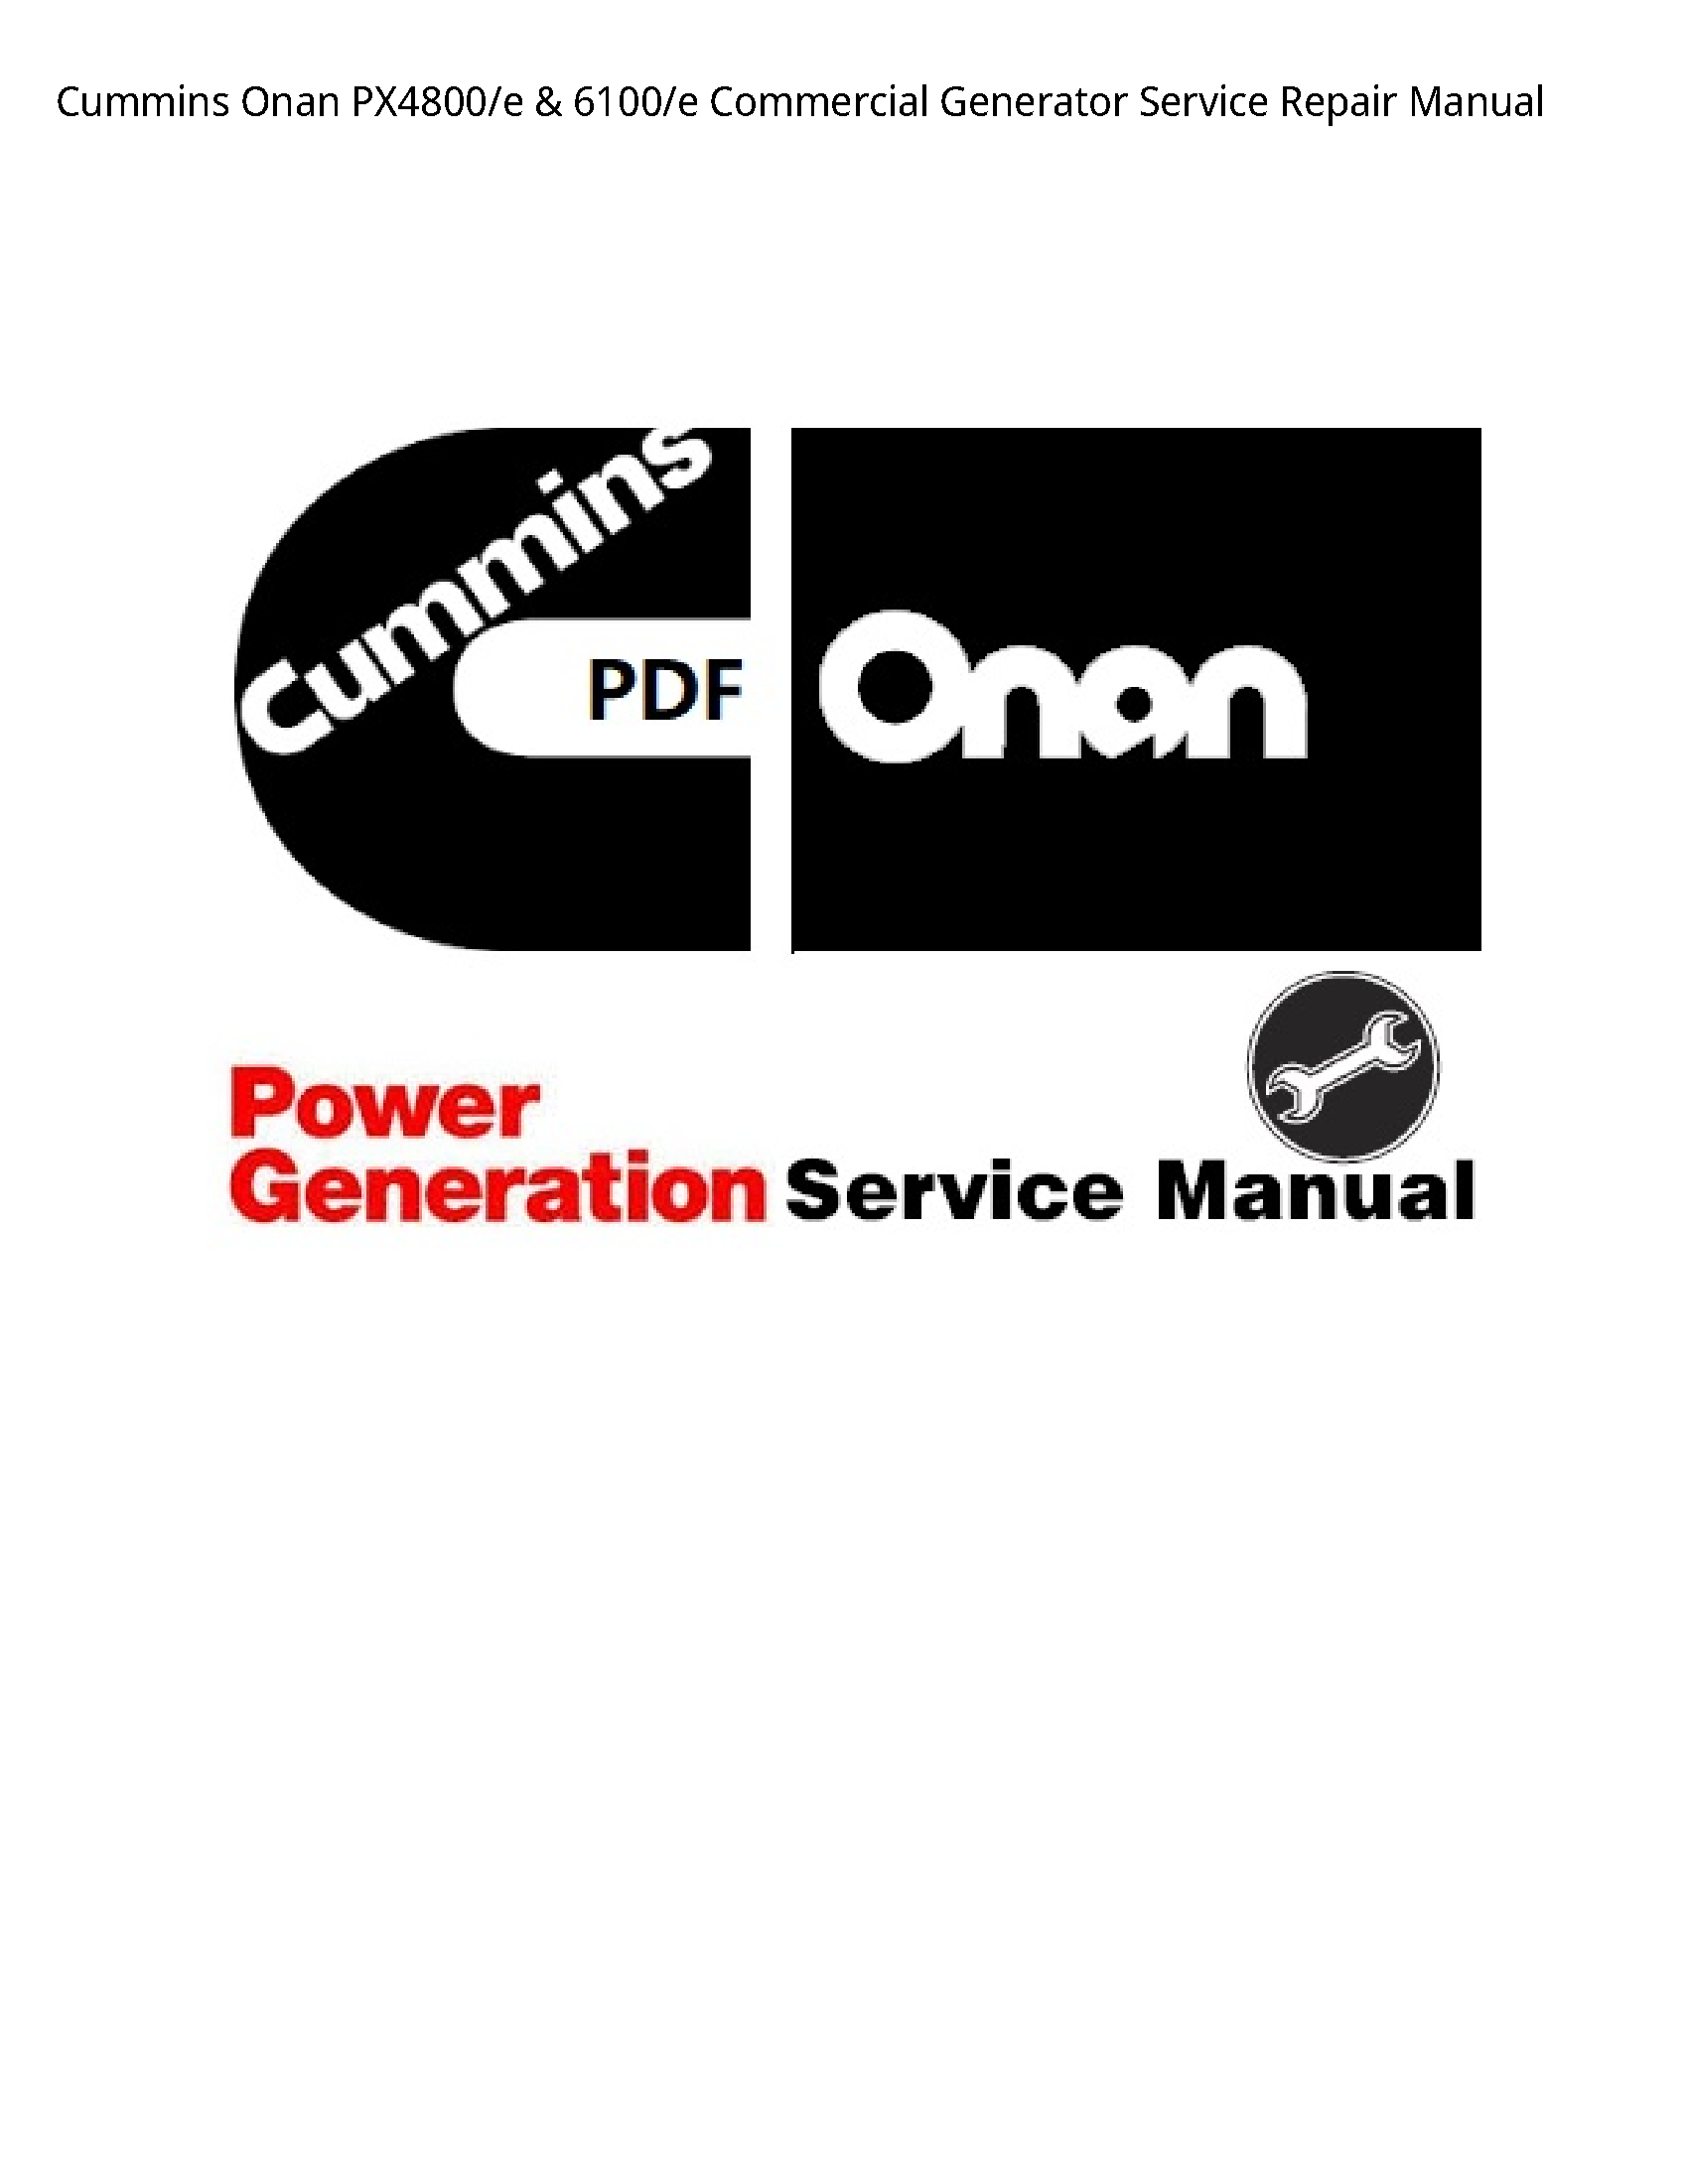 Cummins PX4800 Onan Commercial Generator manual